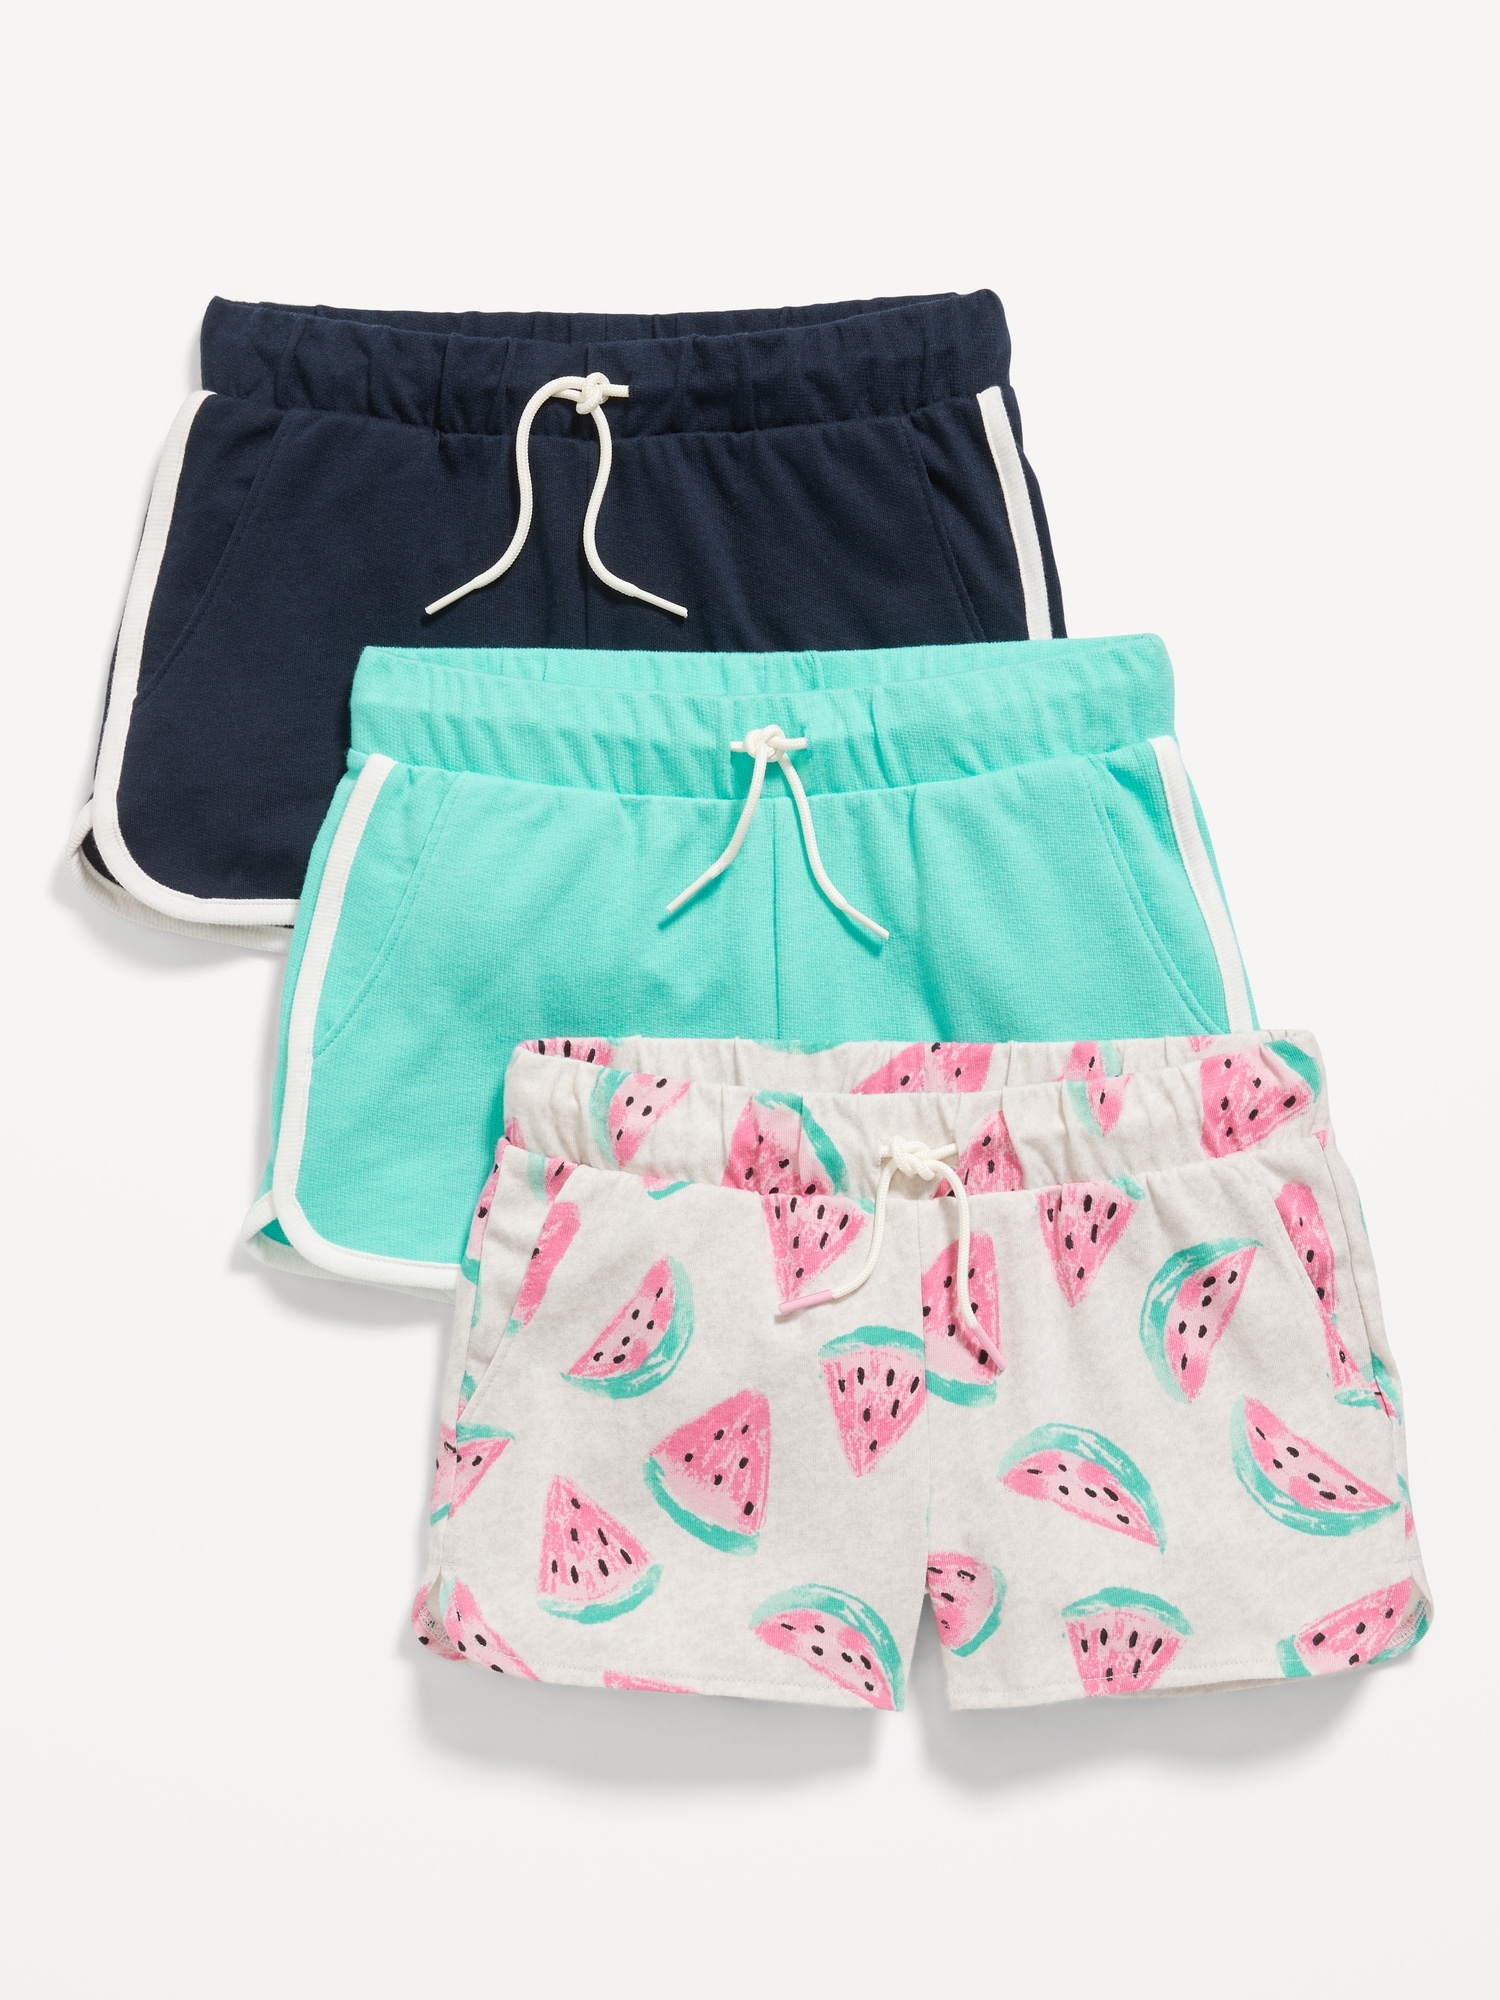 Dolphin-Hem Cheer Shorts Variety 3-Pack for Girls Hot Deal